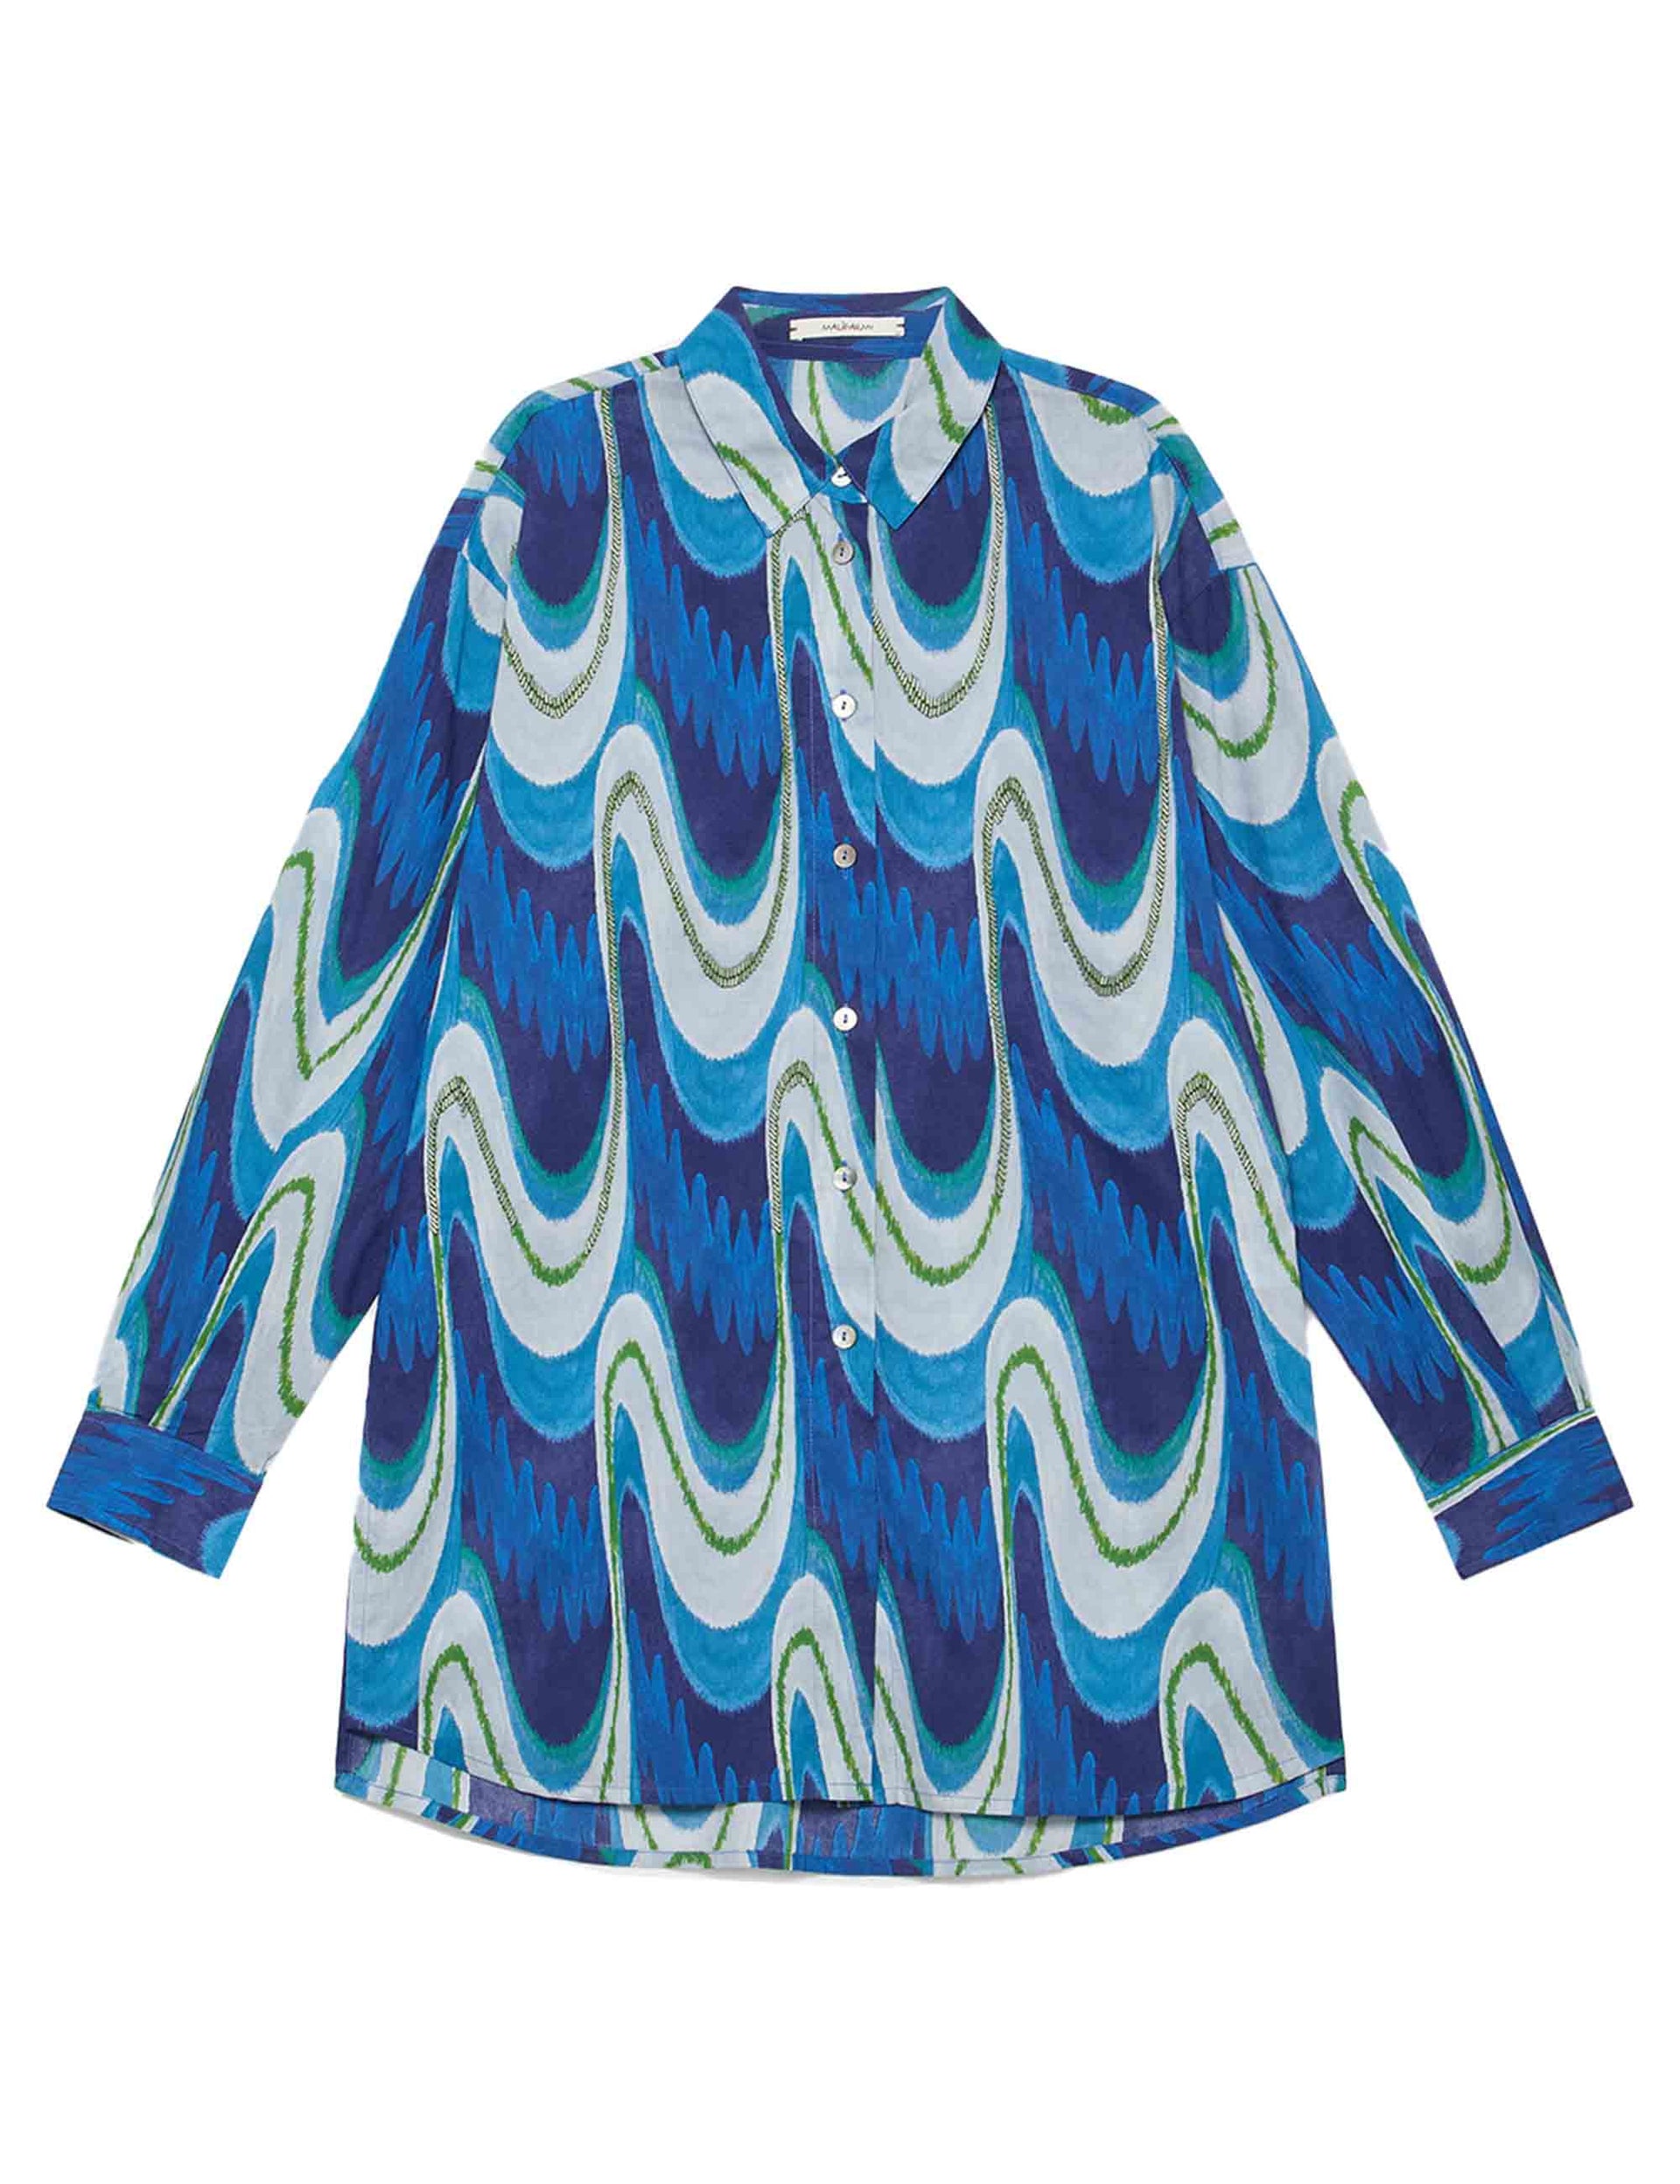 Ikat Wave Muslin women's shirts in blue and light blue cotton